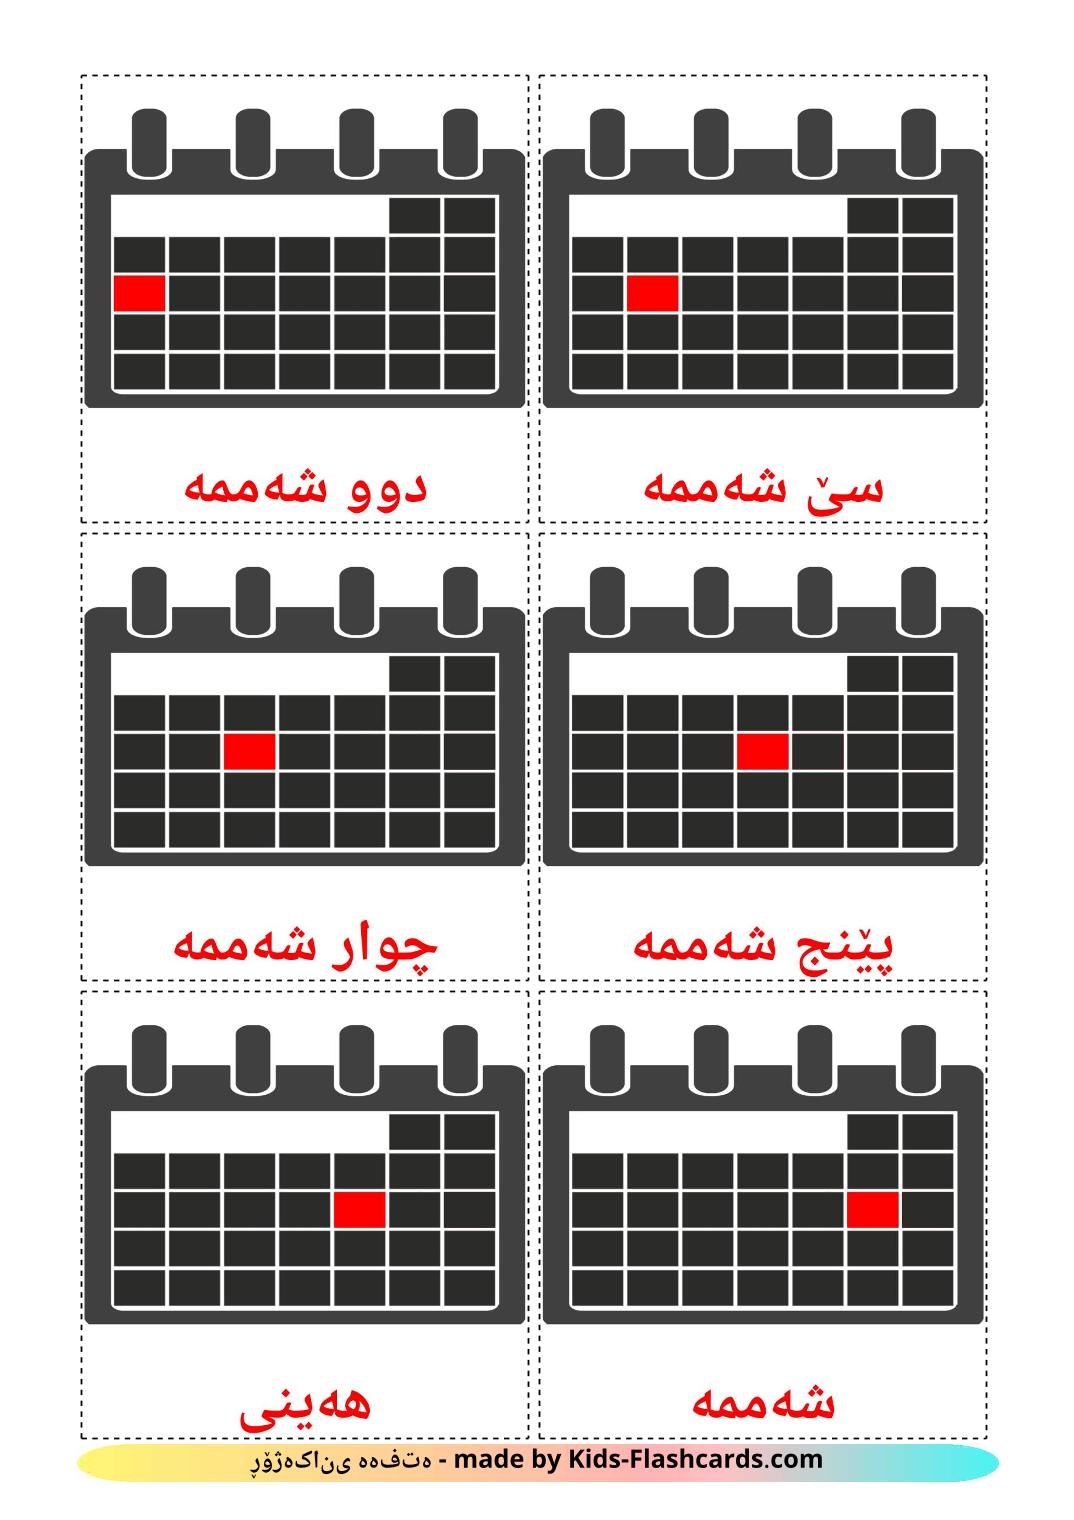 Days of Week - 12 Free Printable kurdish(sorani) Flashcards 